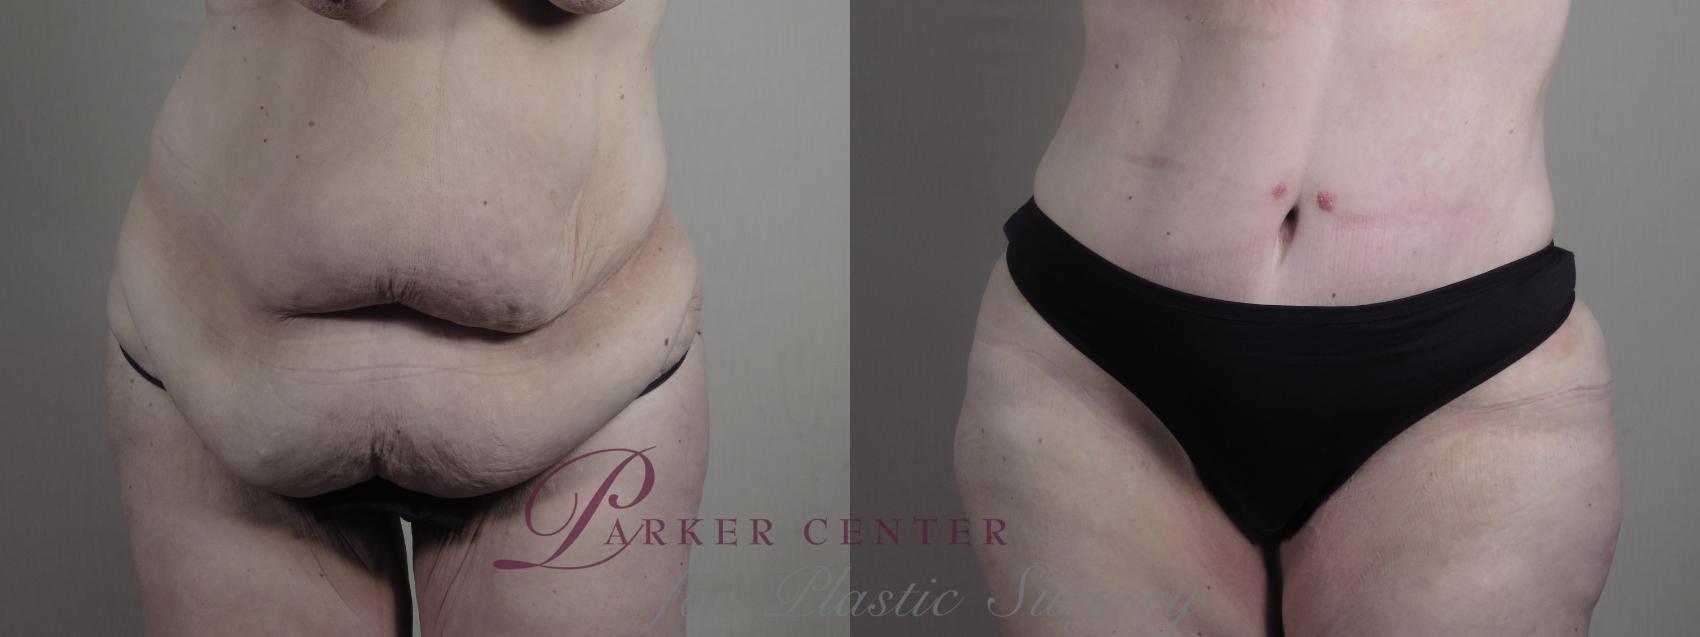 Body Case 1286 Before & After front  | Paramus, NJ | Parker Center for Plastic Surgery